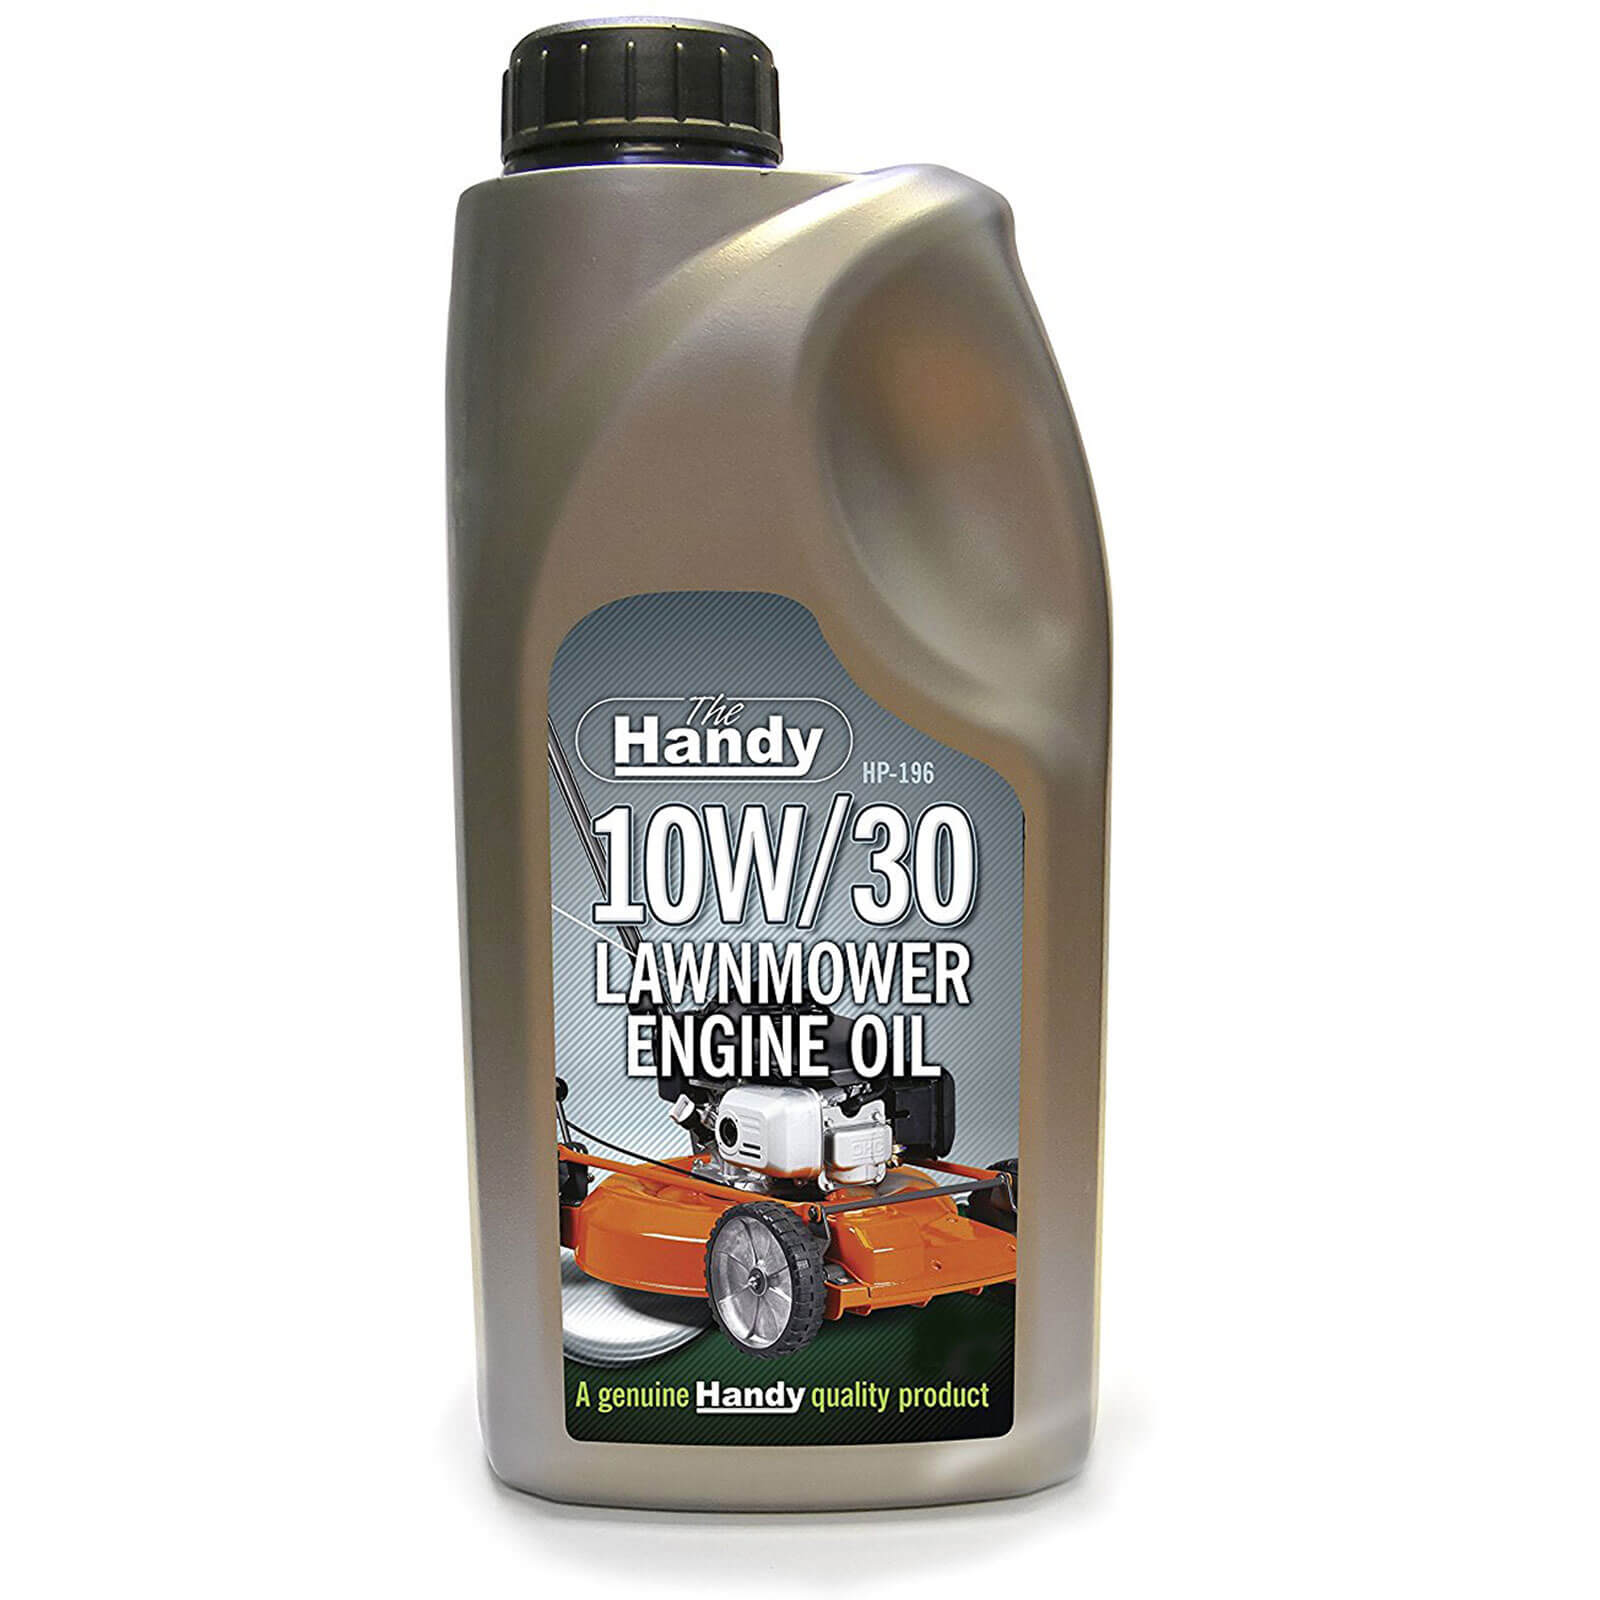 Image of Handy 10W/30 Lawnmower Engine Oil 1l